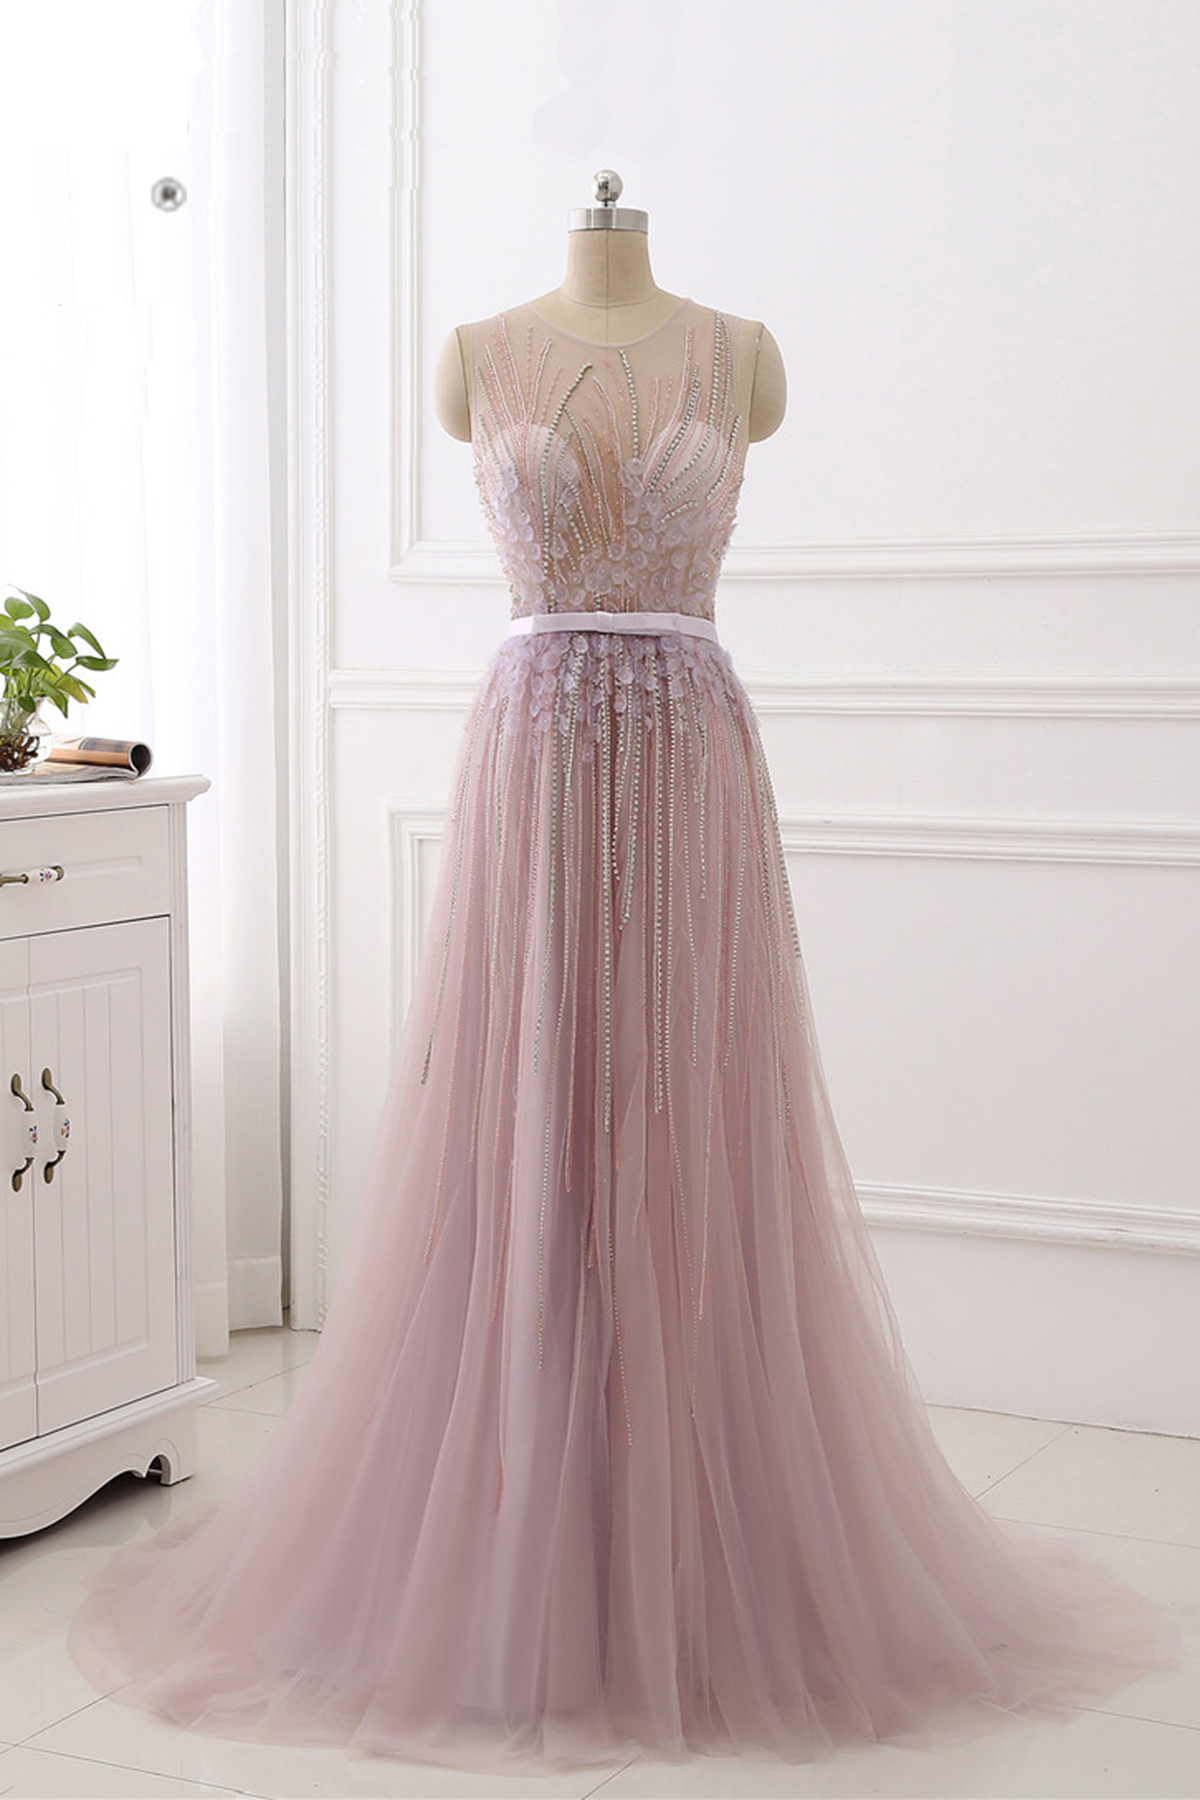 Unique Tulle Beaded Long Evening Dress, 3d Flower Senior Prom Dress